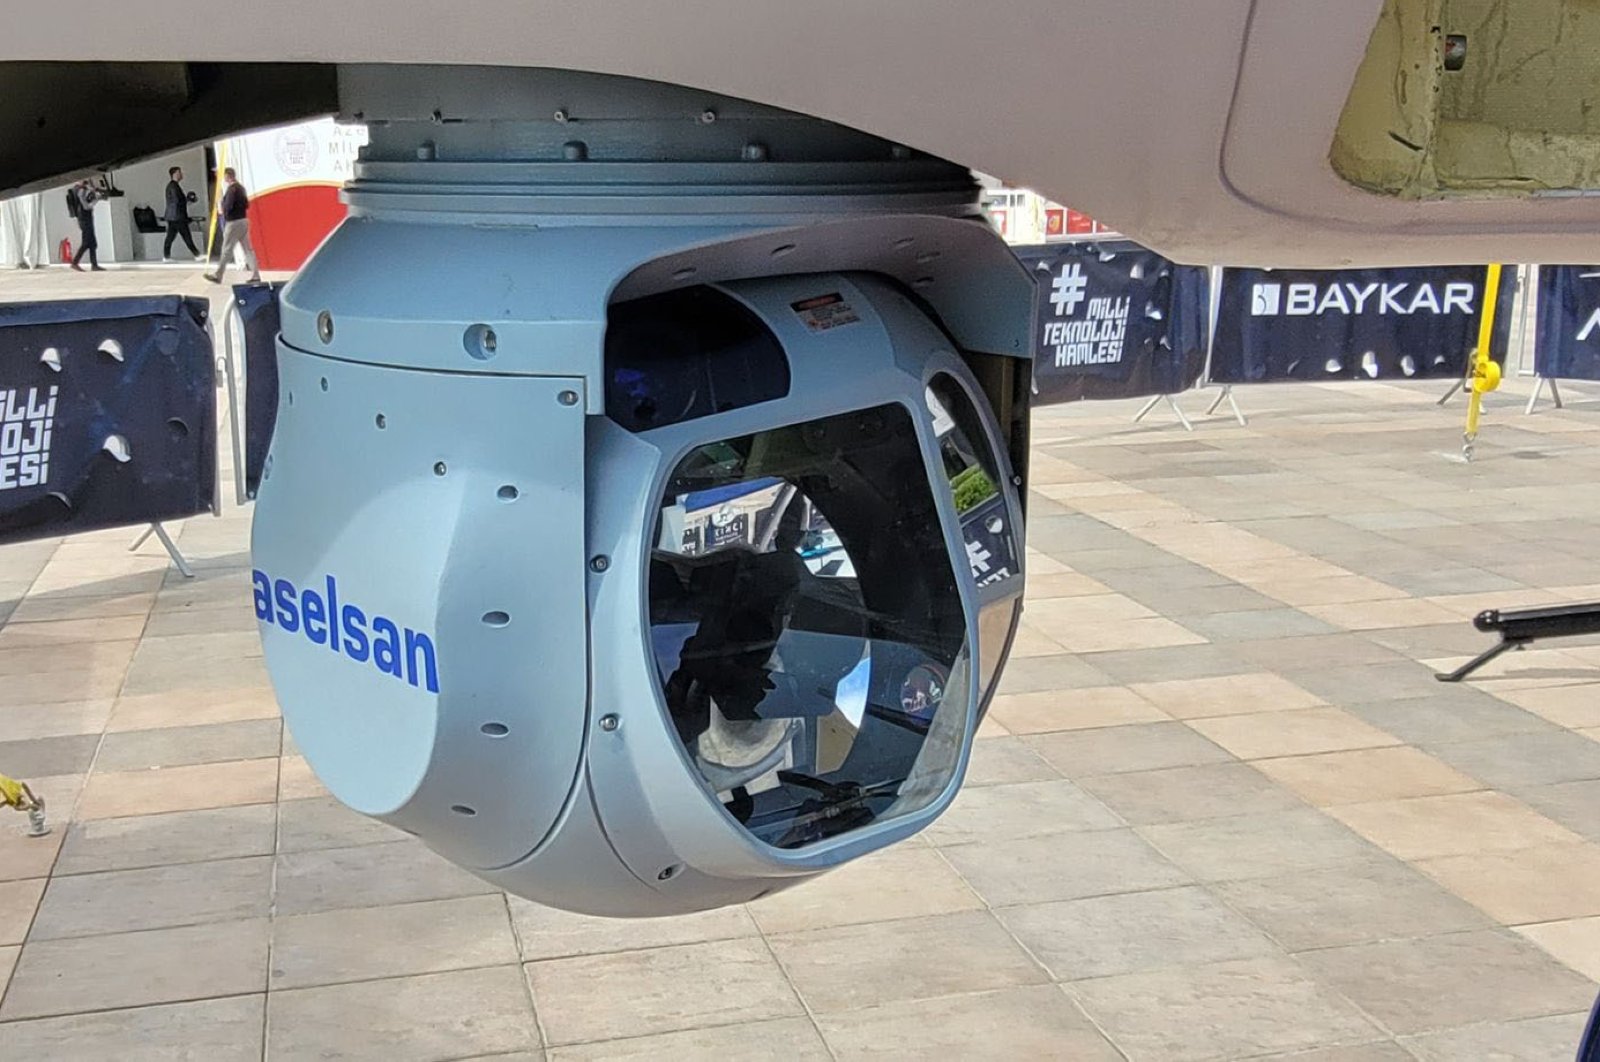 Aselsan akan meningkatkan output elektro-optik drone, mengungkap versi yang ditingkatkan